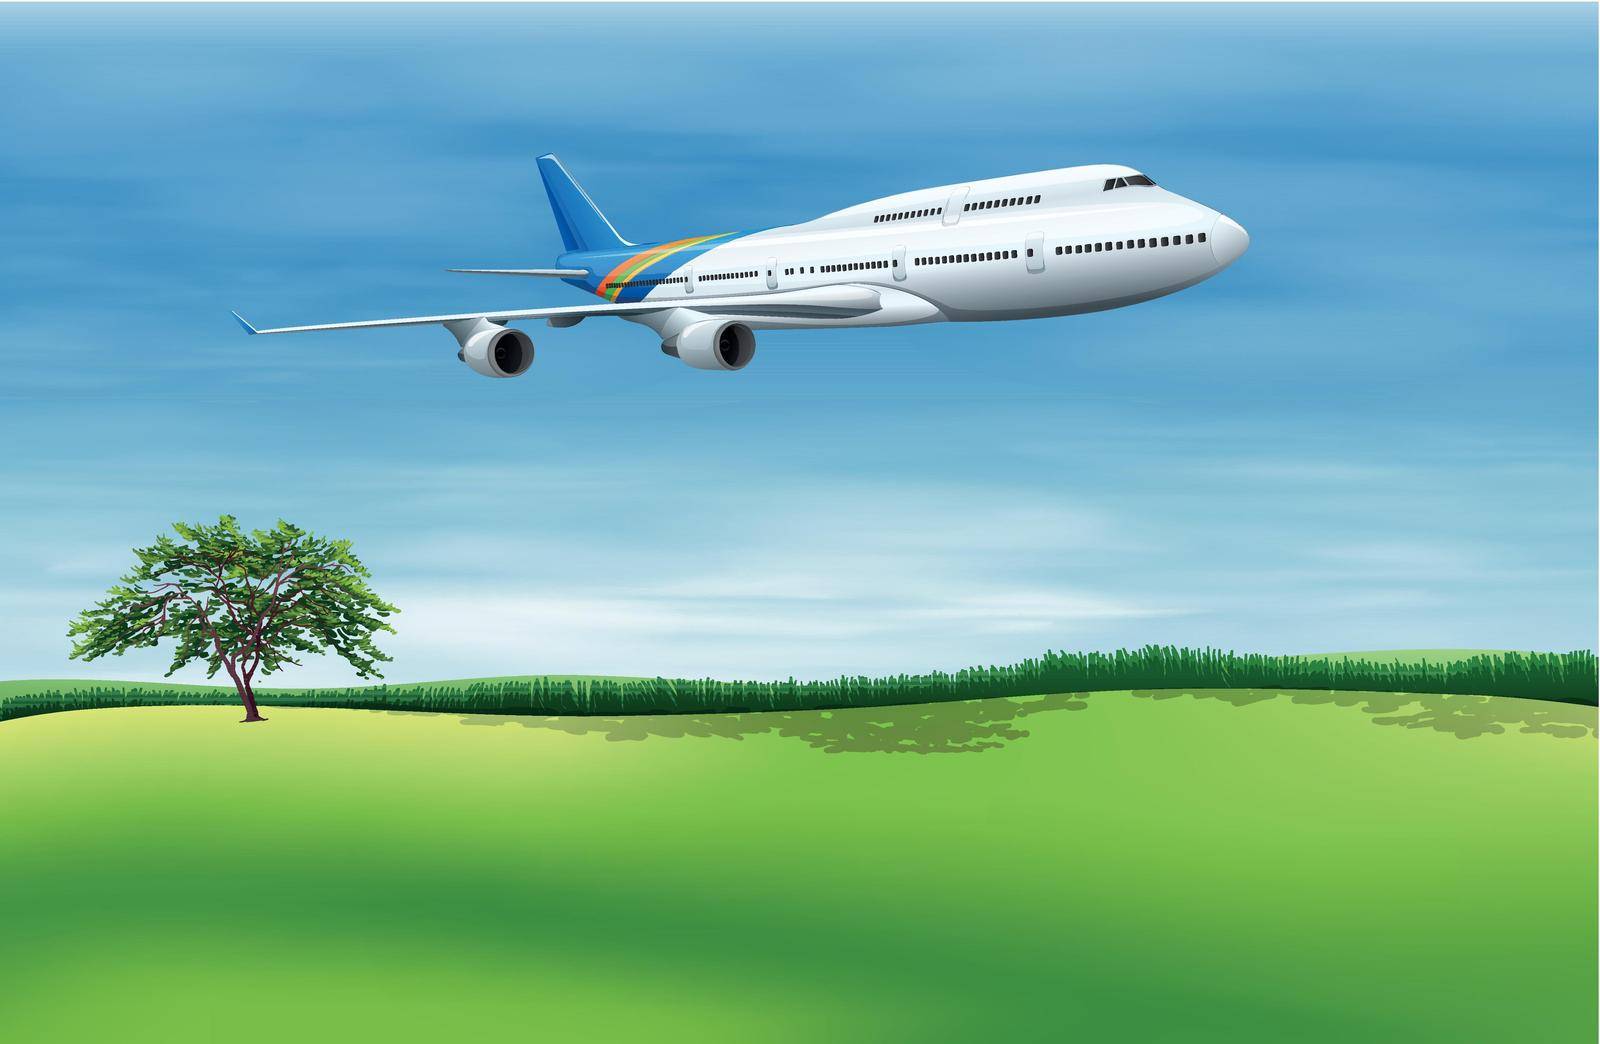 Illustration of a big commercial plane